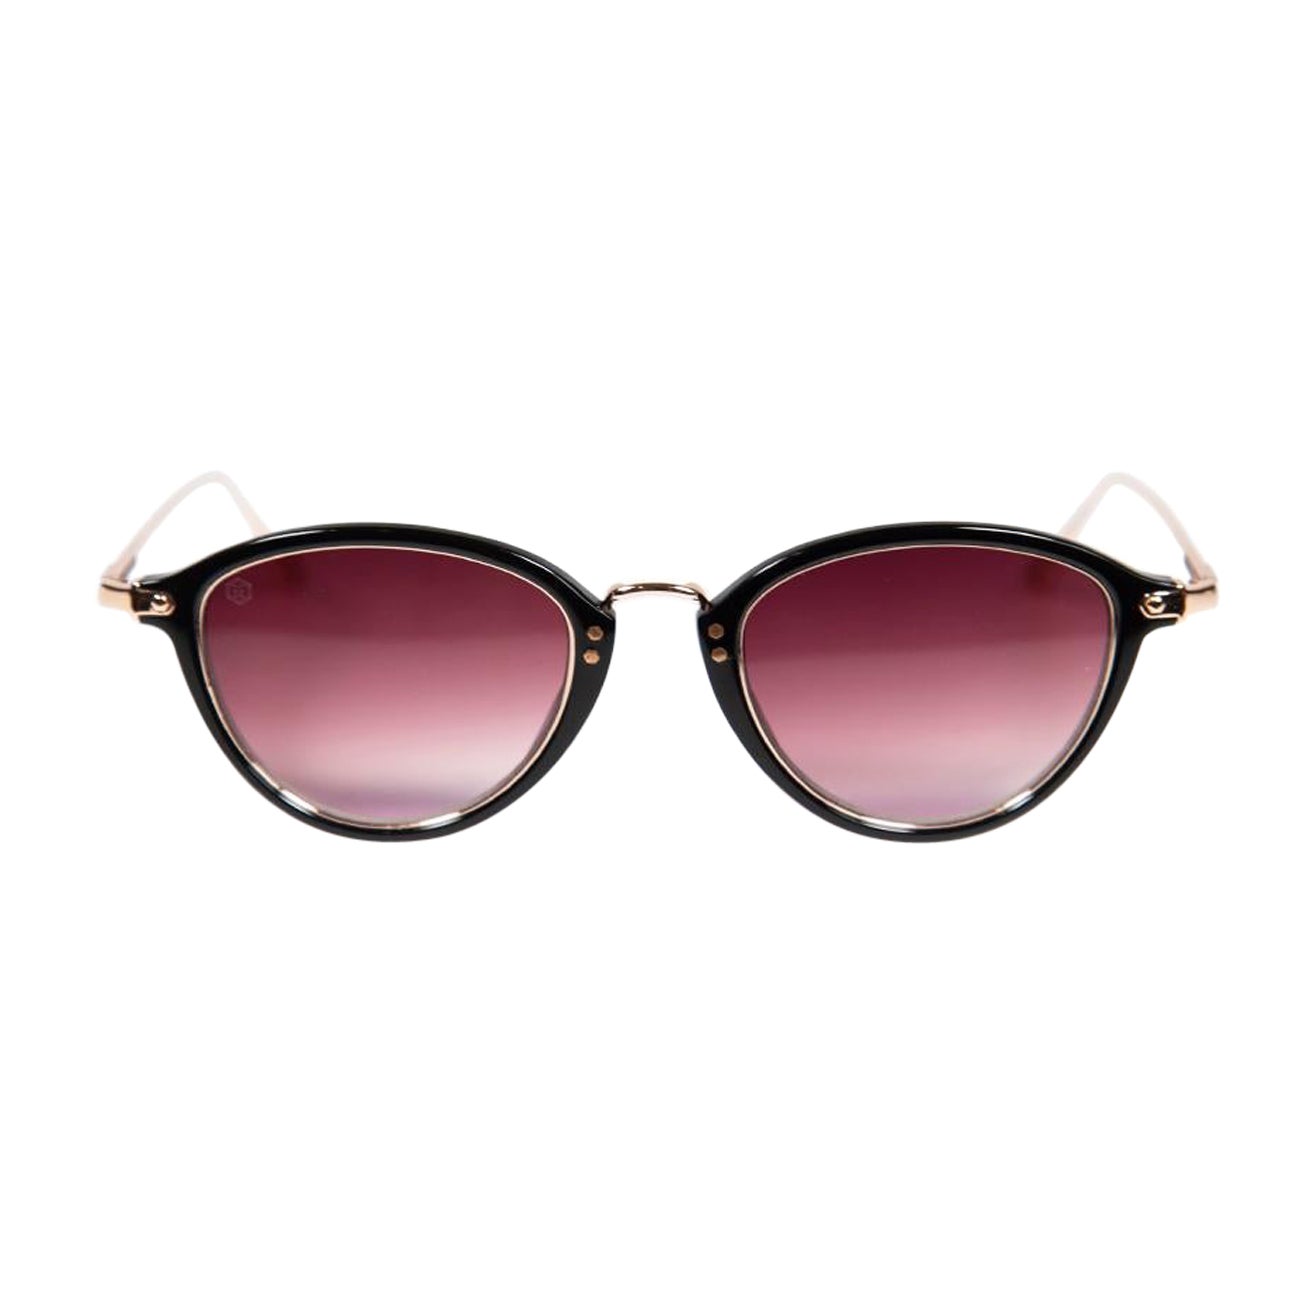 Taylor Morris Black Frame Purple Lens Sunglasses For Sale